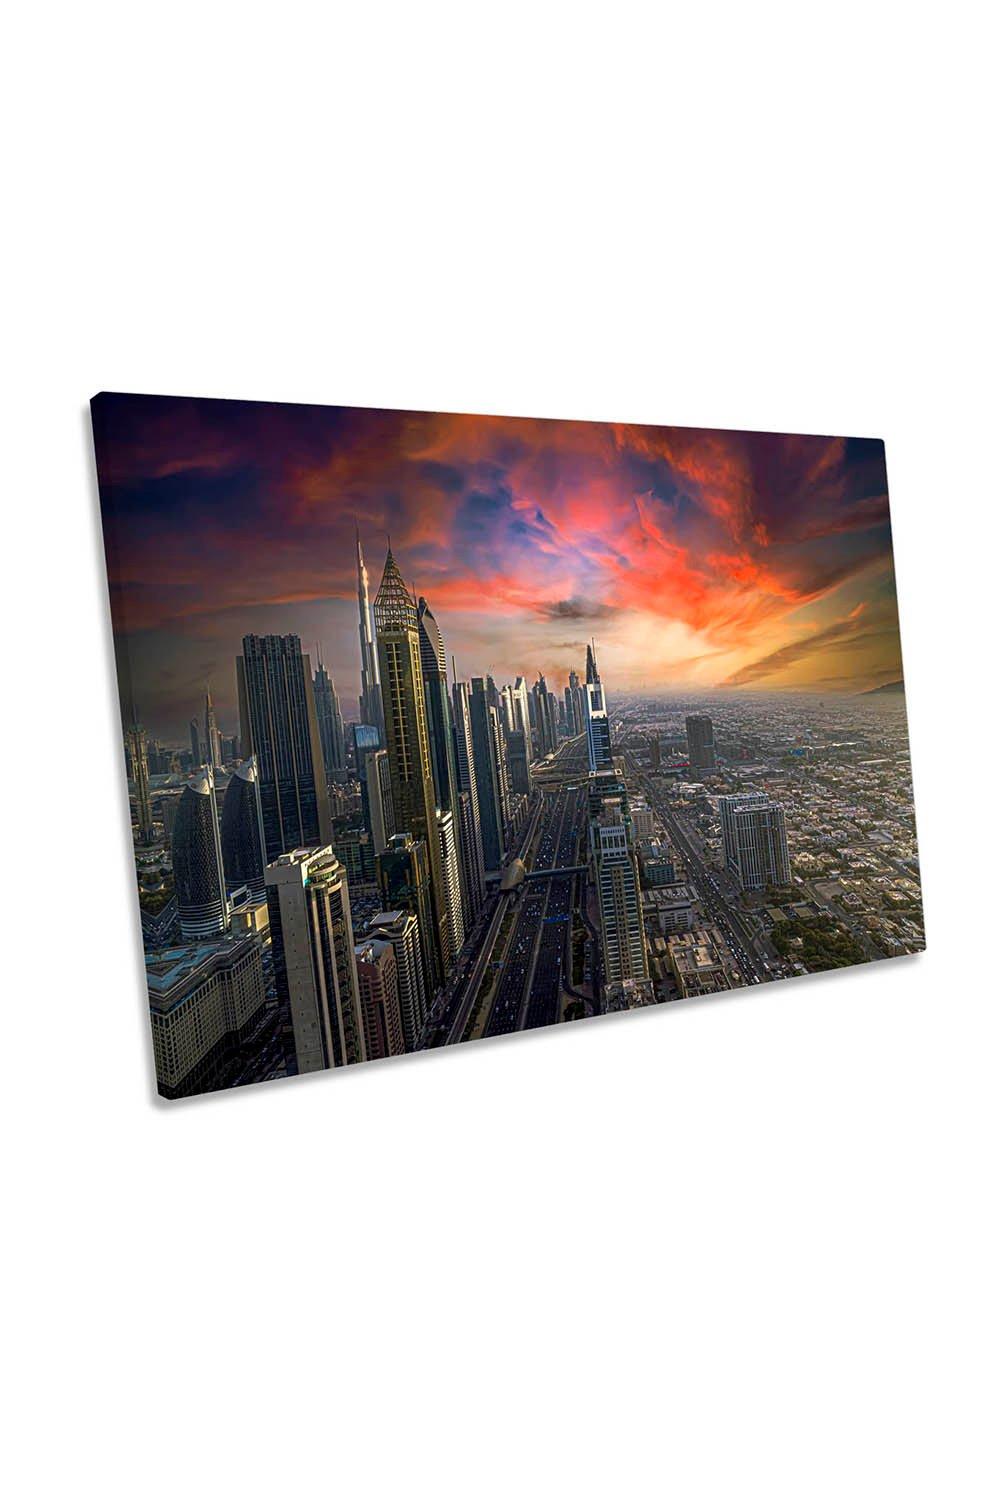 Dubai Sunset City Skyline Canvas Wall Art Picture Print